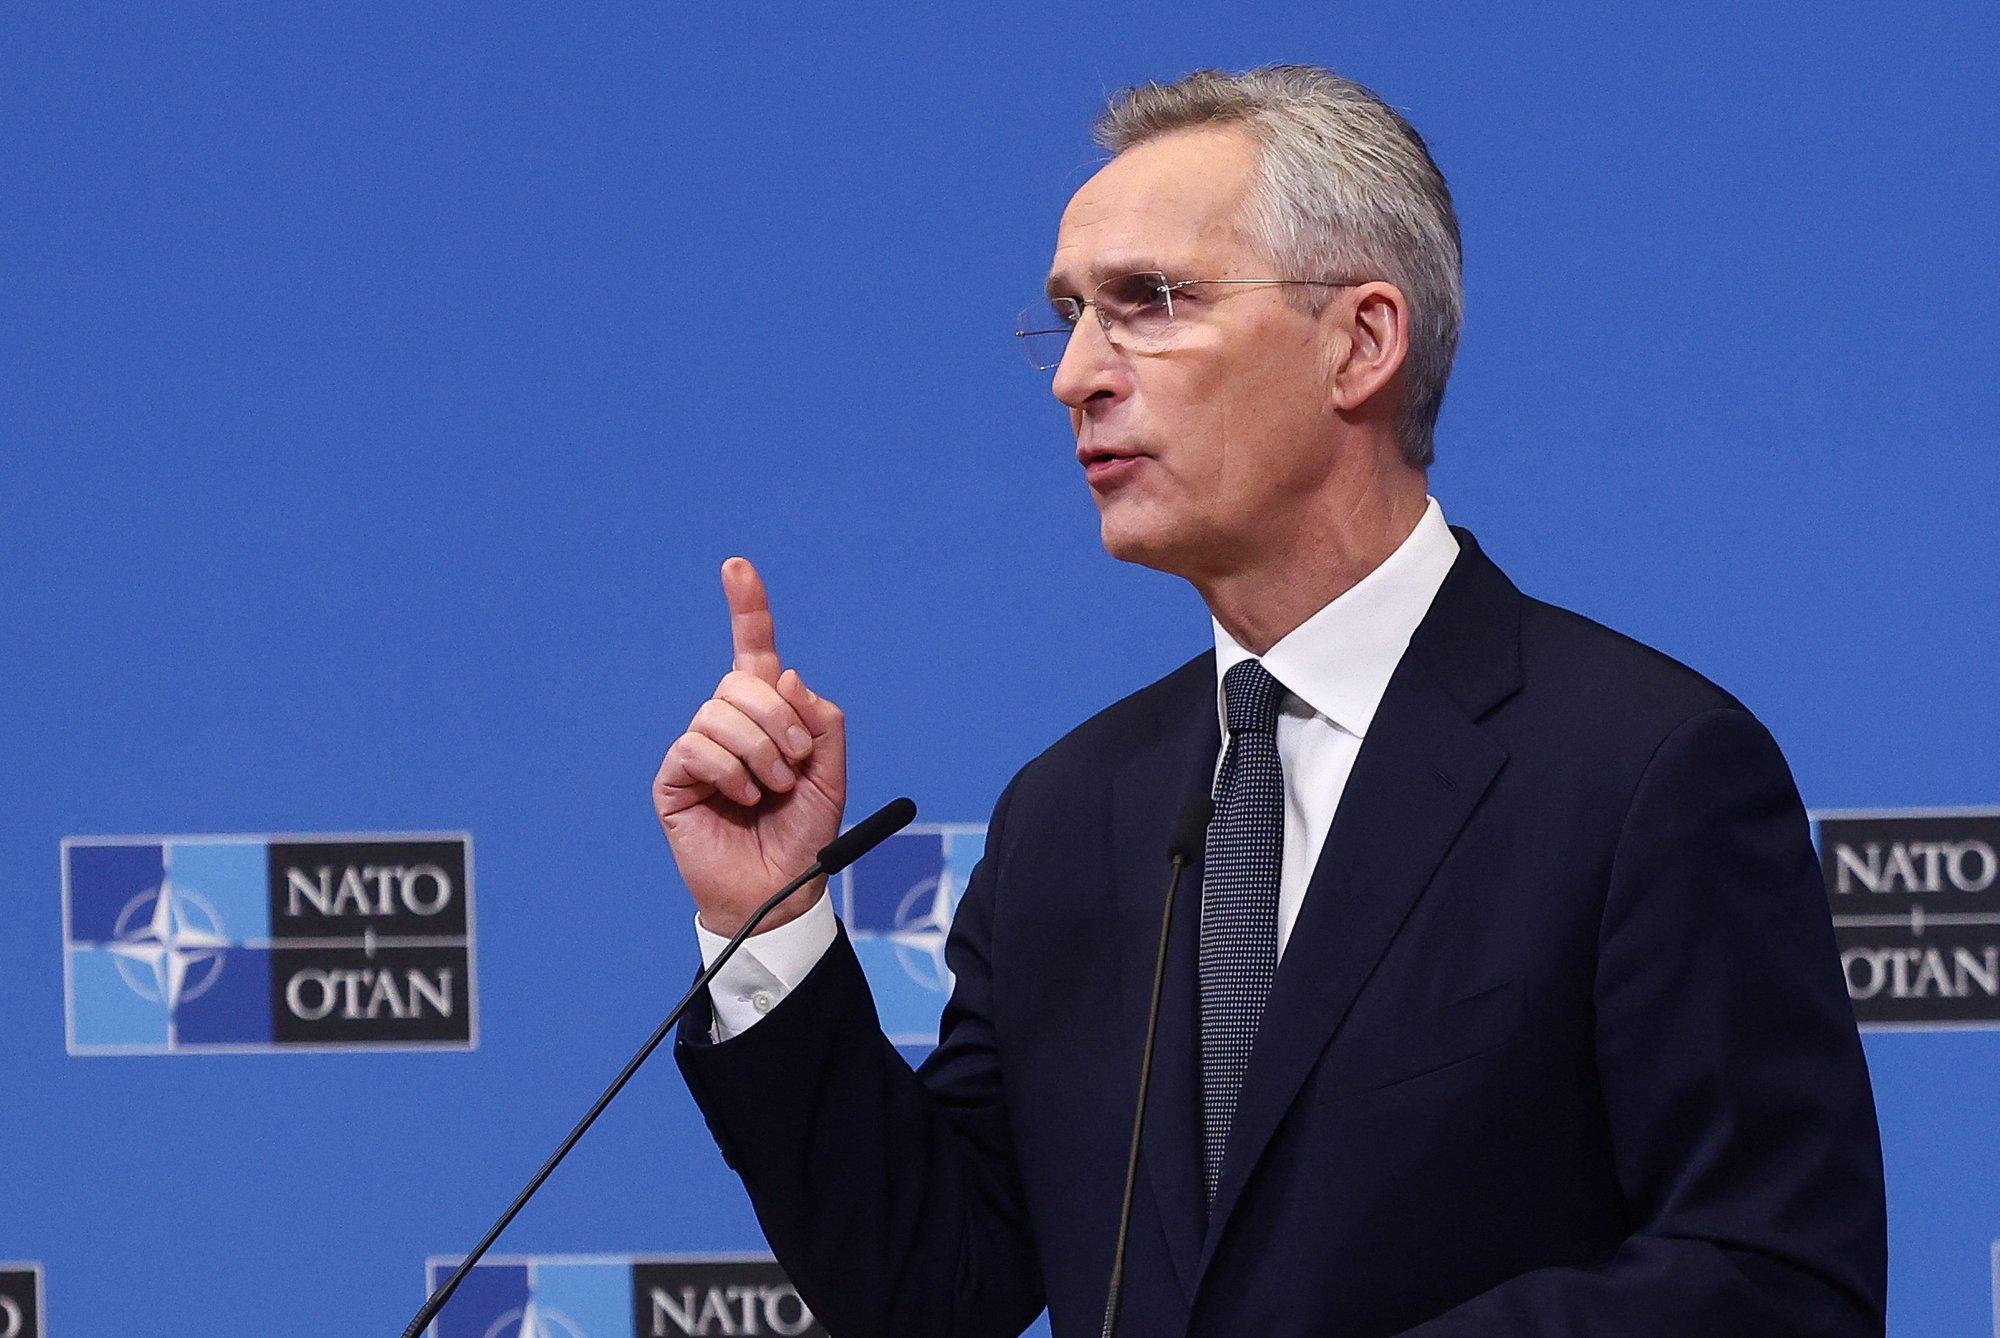 Глава НАТО предупреждает об "авторитарном" альянсе России, Китая, Ирана и КНДР против Запада